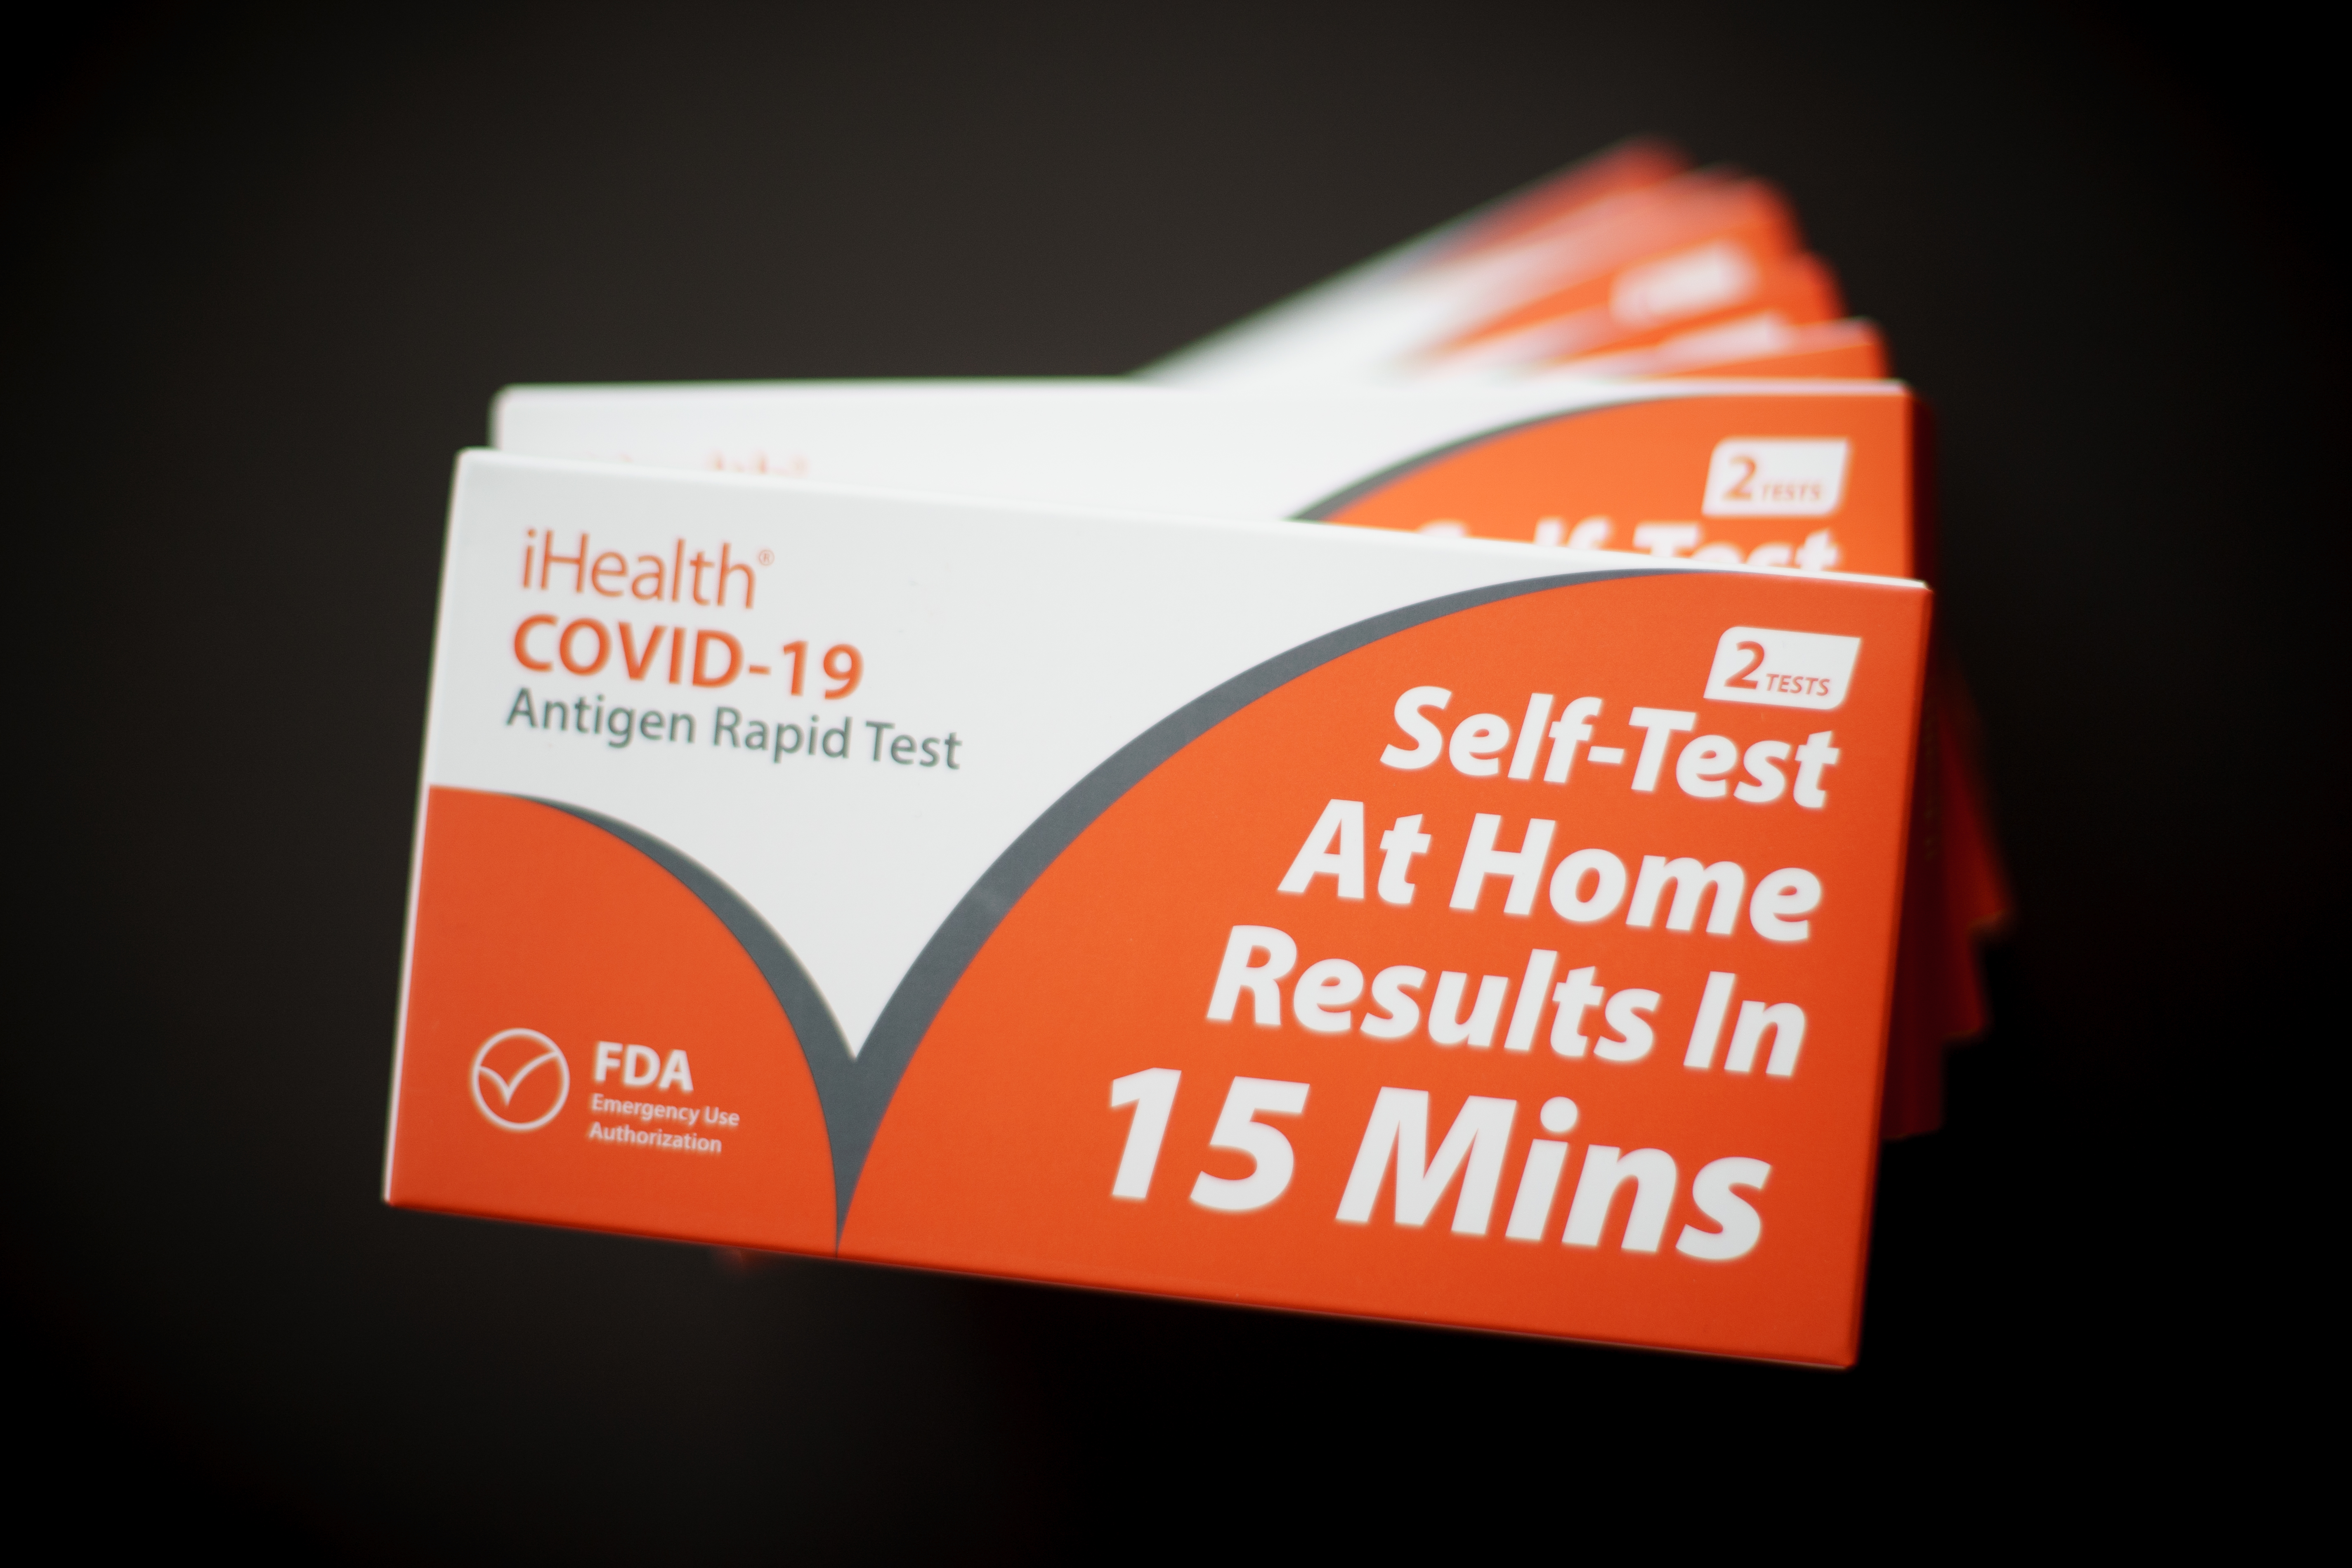  iHealth COVID-19 Antigen Rapid Test, 1 Pack, 2 Tests